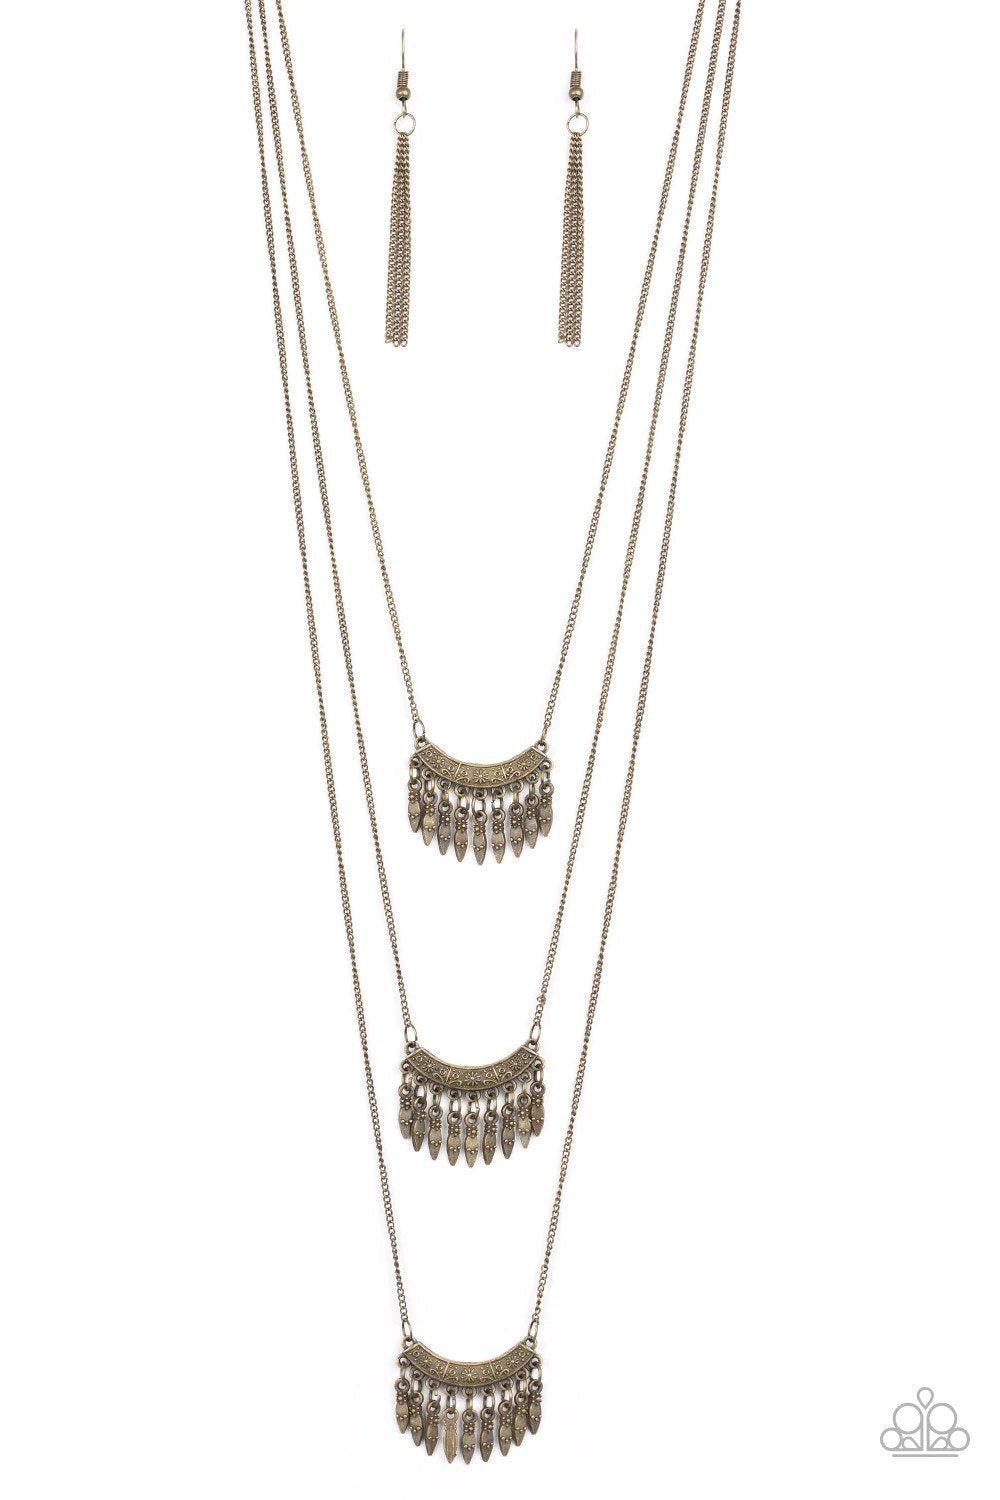 Seasonal Charm Brass Necklace - Paparazzi Accessories- lightbox - CarasShop.com - $5 Jewelry by Cara Jewels